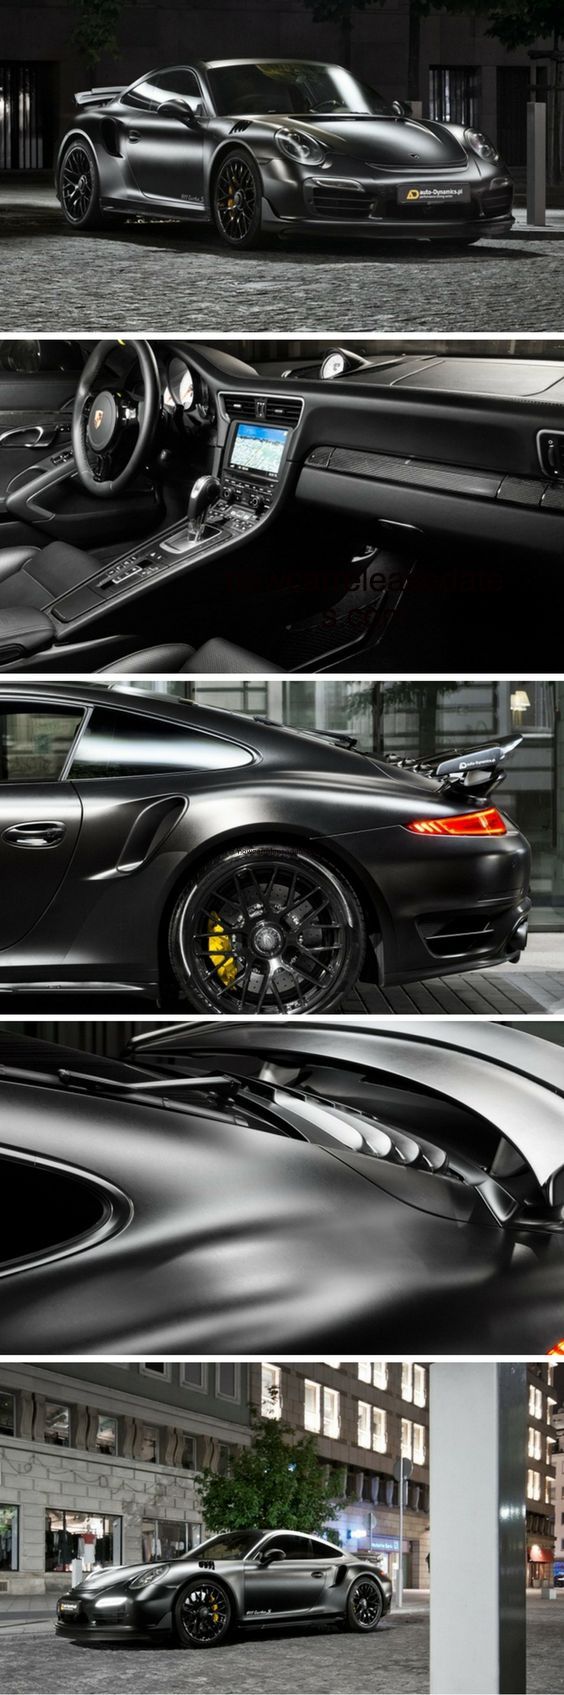 MUST SEE NEW “2018 Porsche 911 Turbo S ‘Dark Knight”  Concept Release Date, Price, News, Reviews www.newcarreleasedates.com